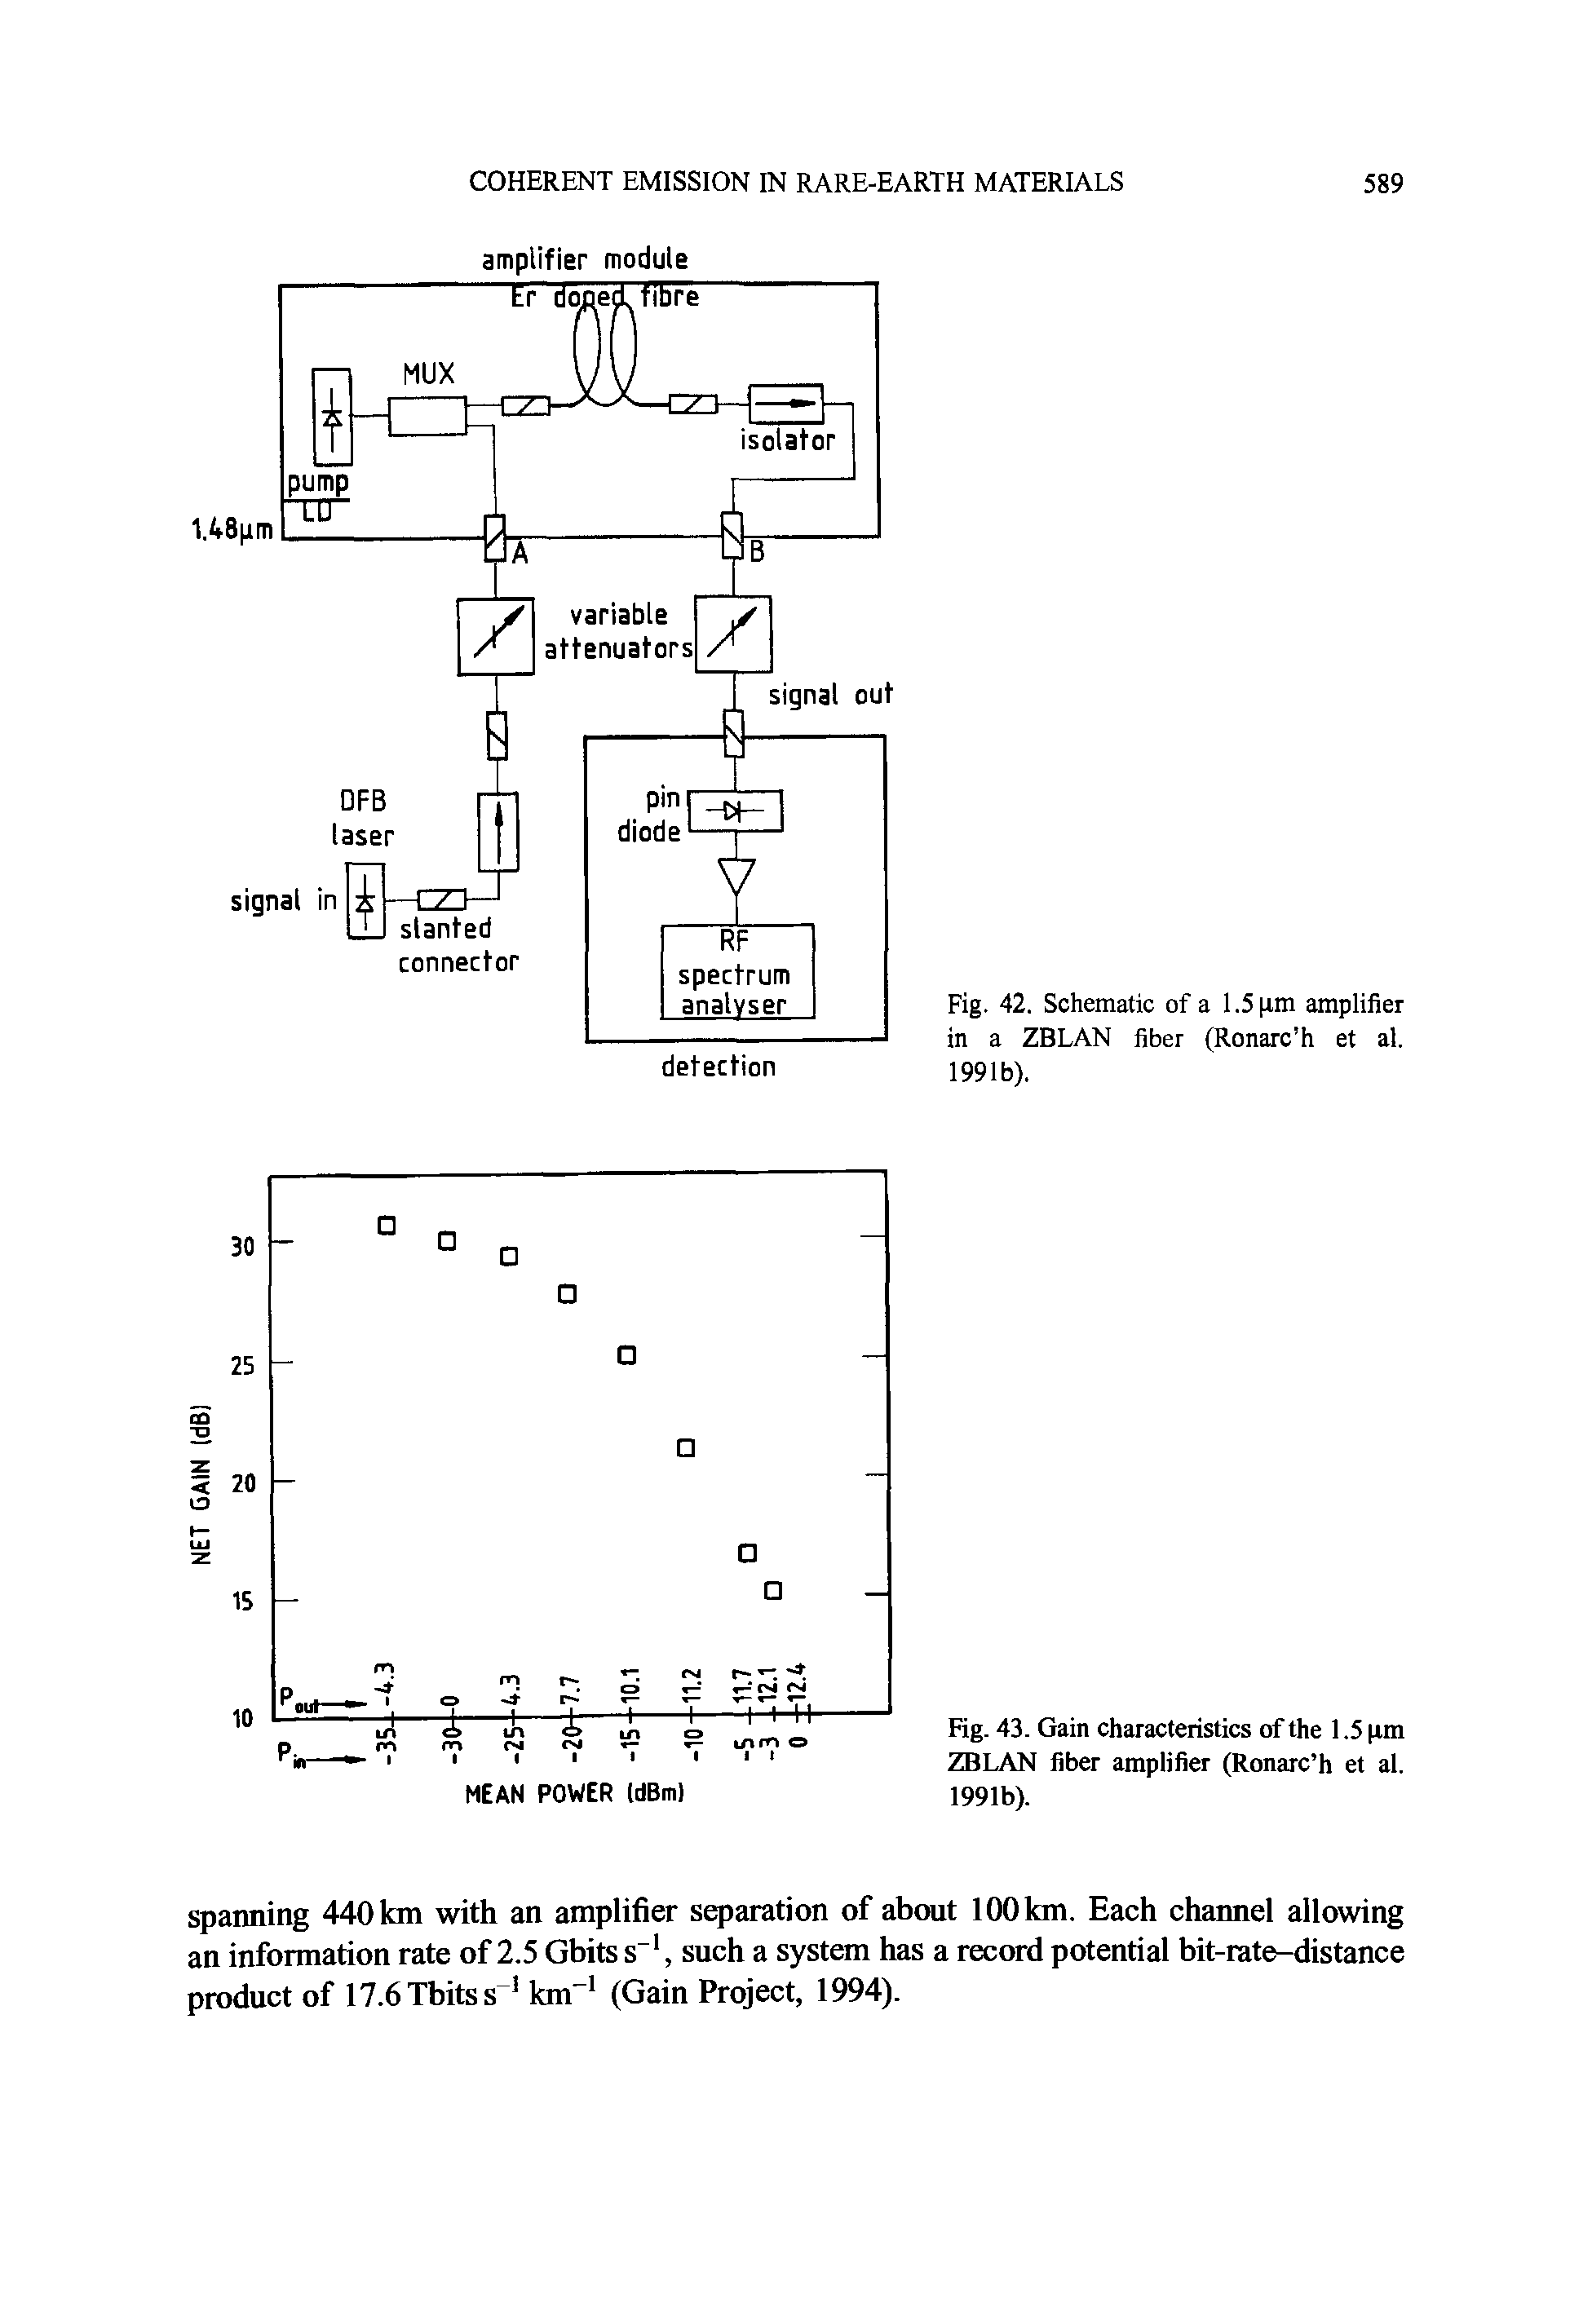 Fig. 42. Schematic of a 1.5 pm amplifier in a ZBLAN fiber (Ronarc h et al. 1991b).